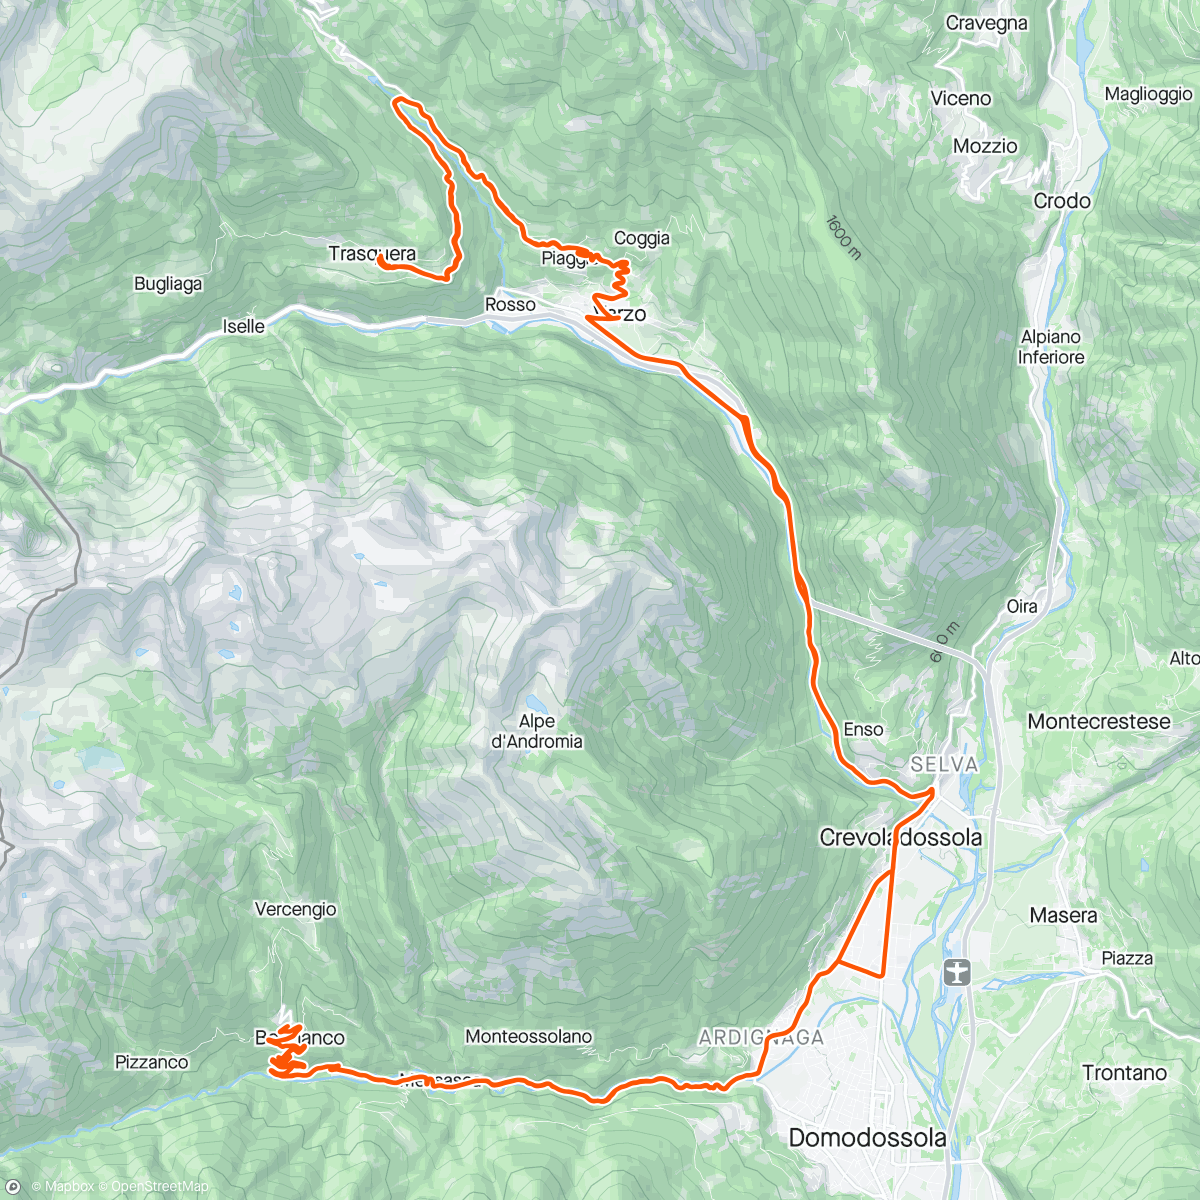 Map of the activity, Trasquera-Bognanco-Trasquera